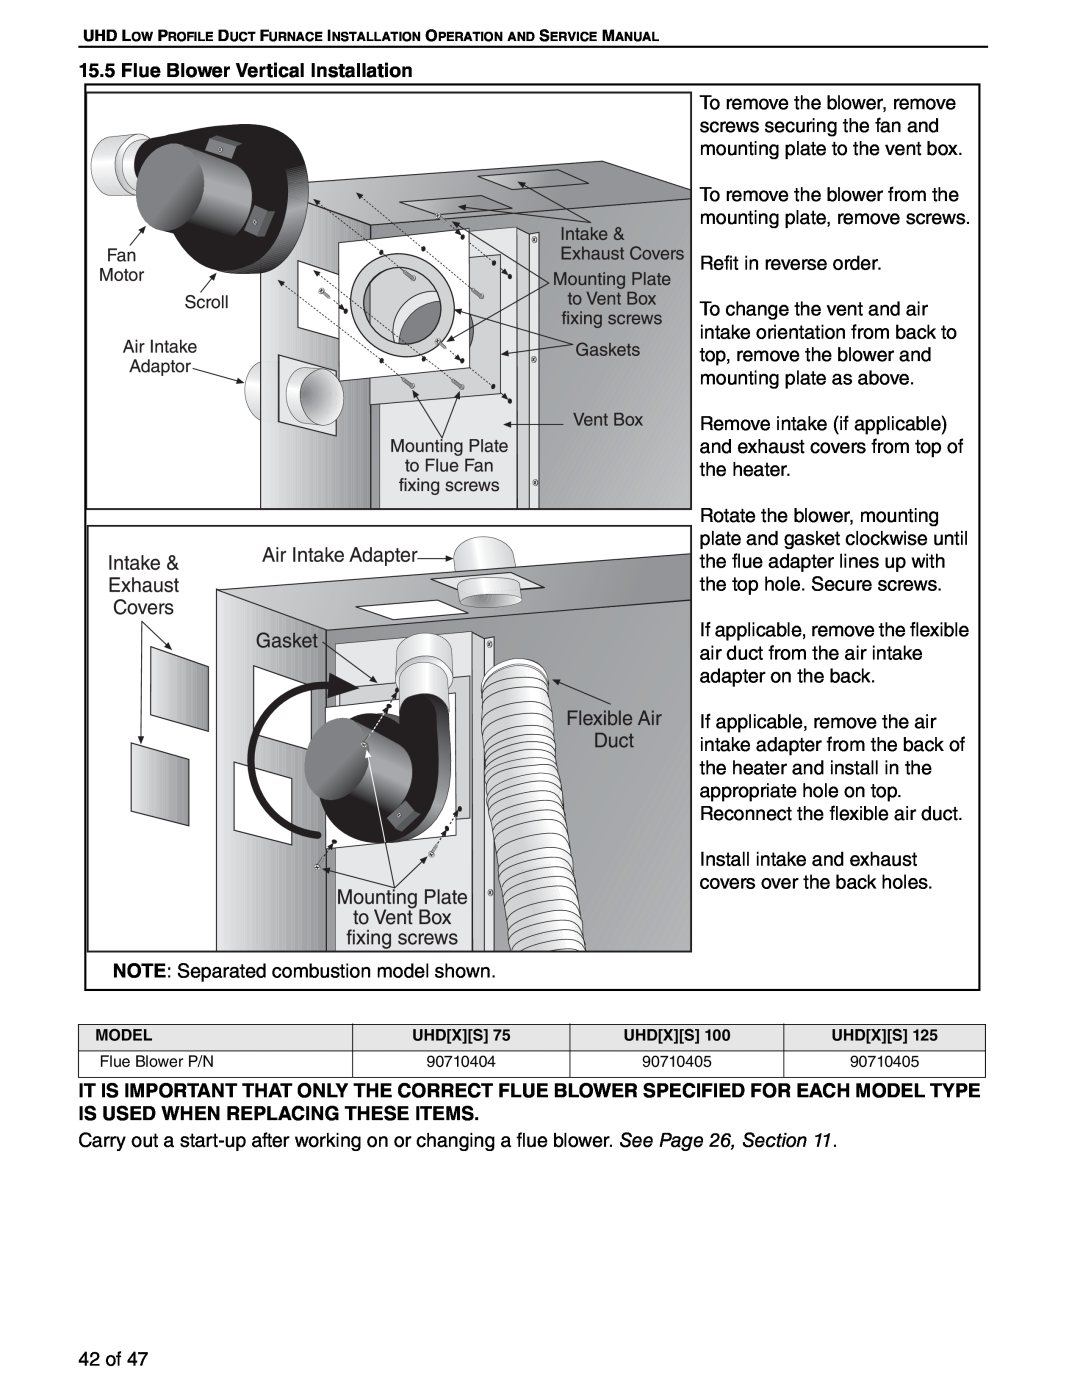 Roberts Gorden 125, 75, 100 service manual Flue Blower Vertical Installation 